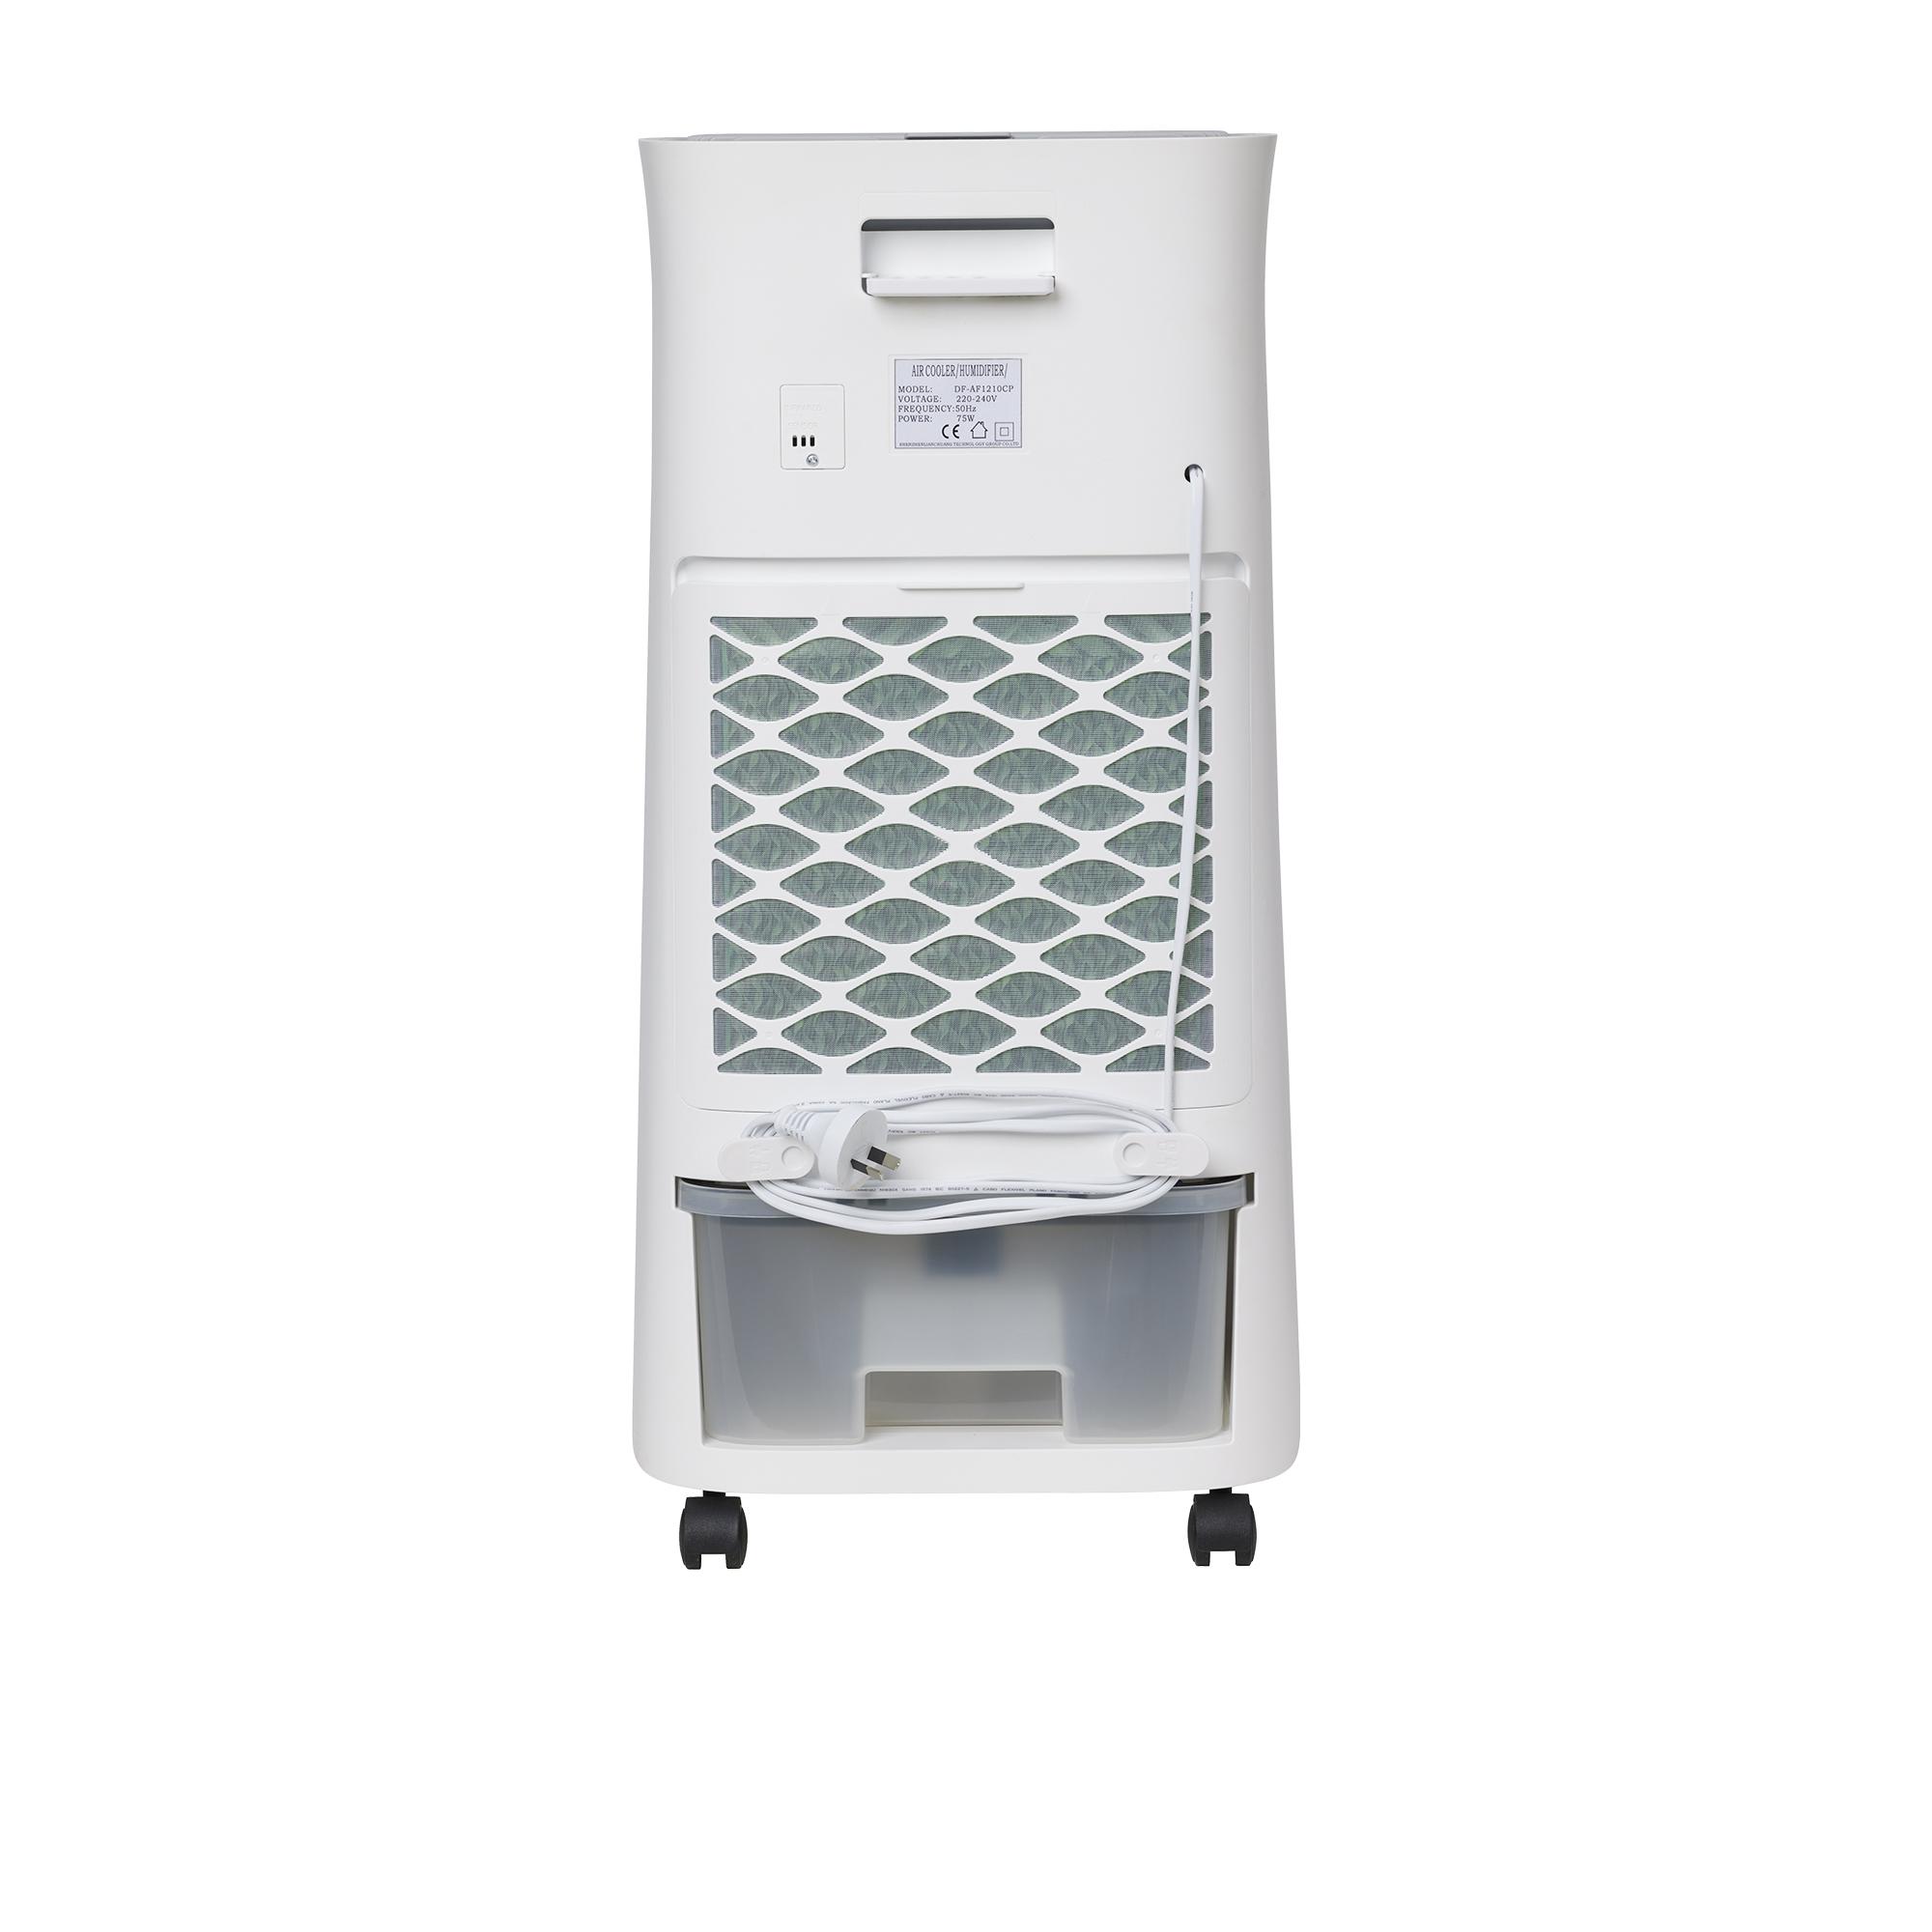 Dimplex Evaporative Cooler with Air Purifier Image 4